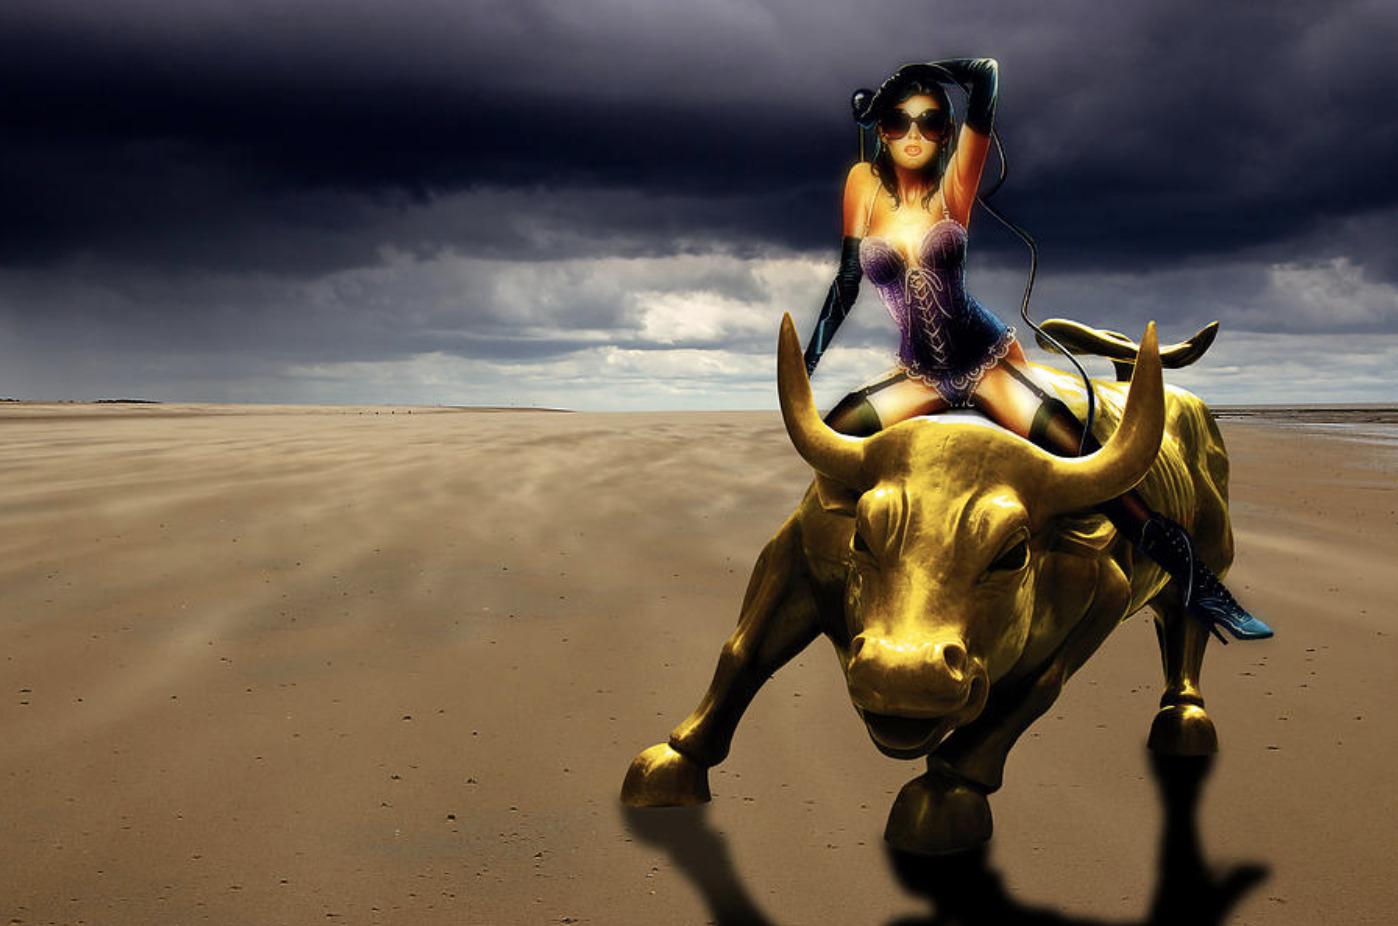 Bull on the beach, Digital on Glass - Print by Jan Rafael